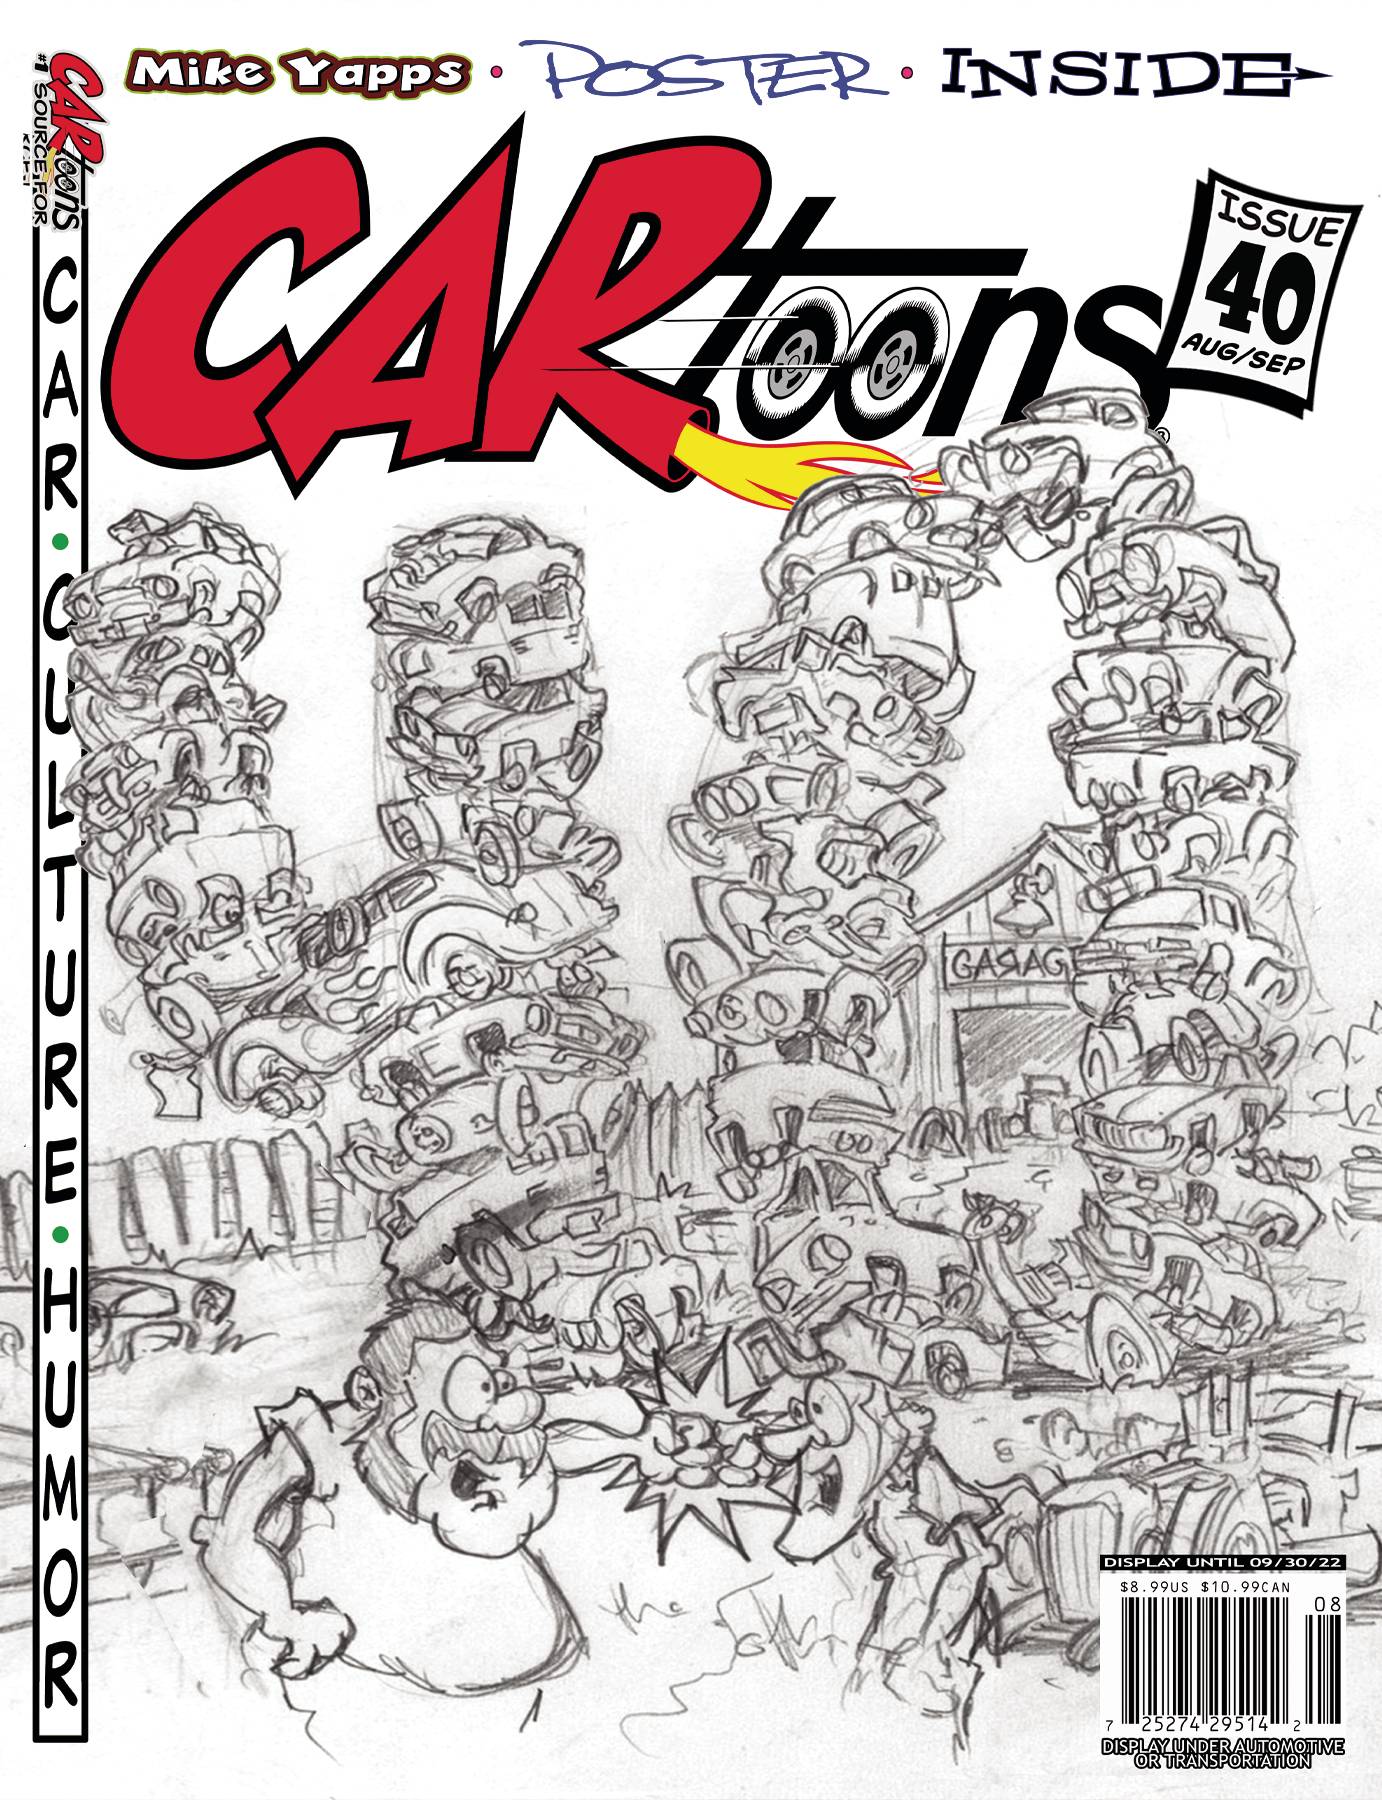 CARTOONS MAGAZINE #40